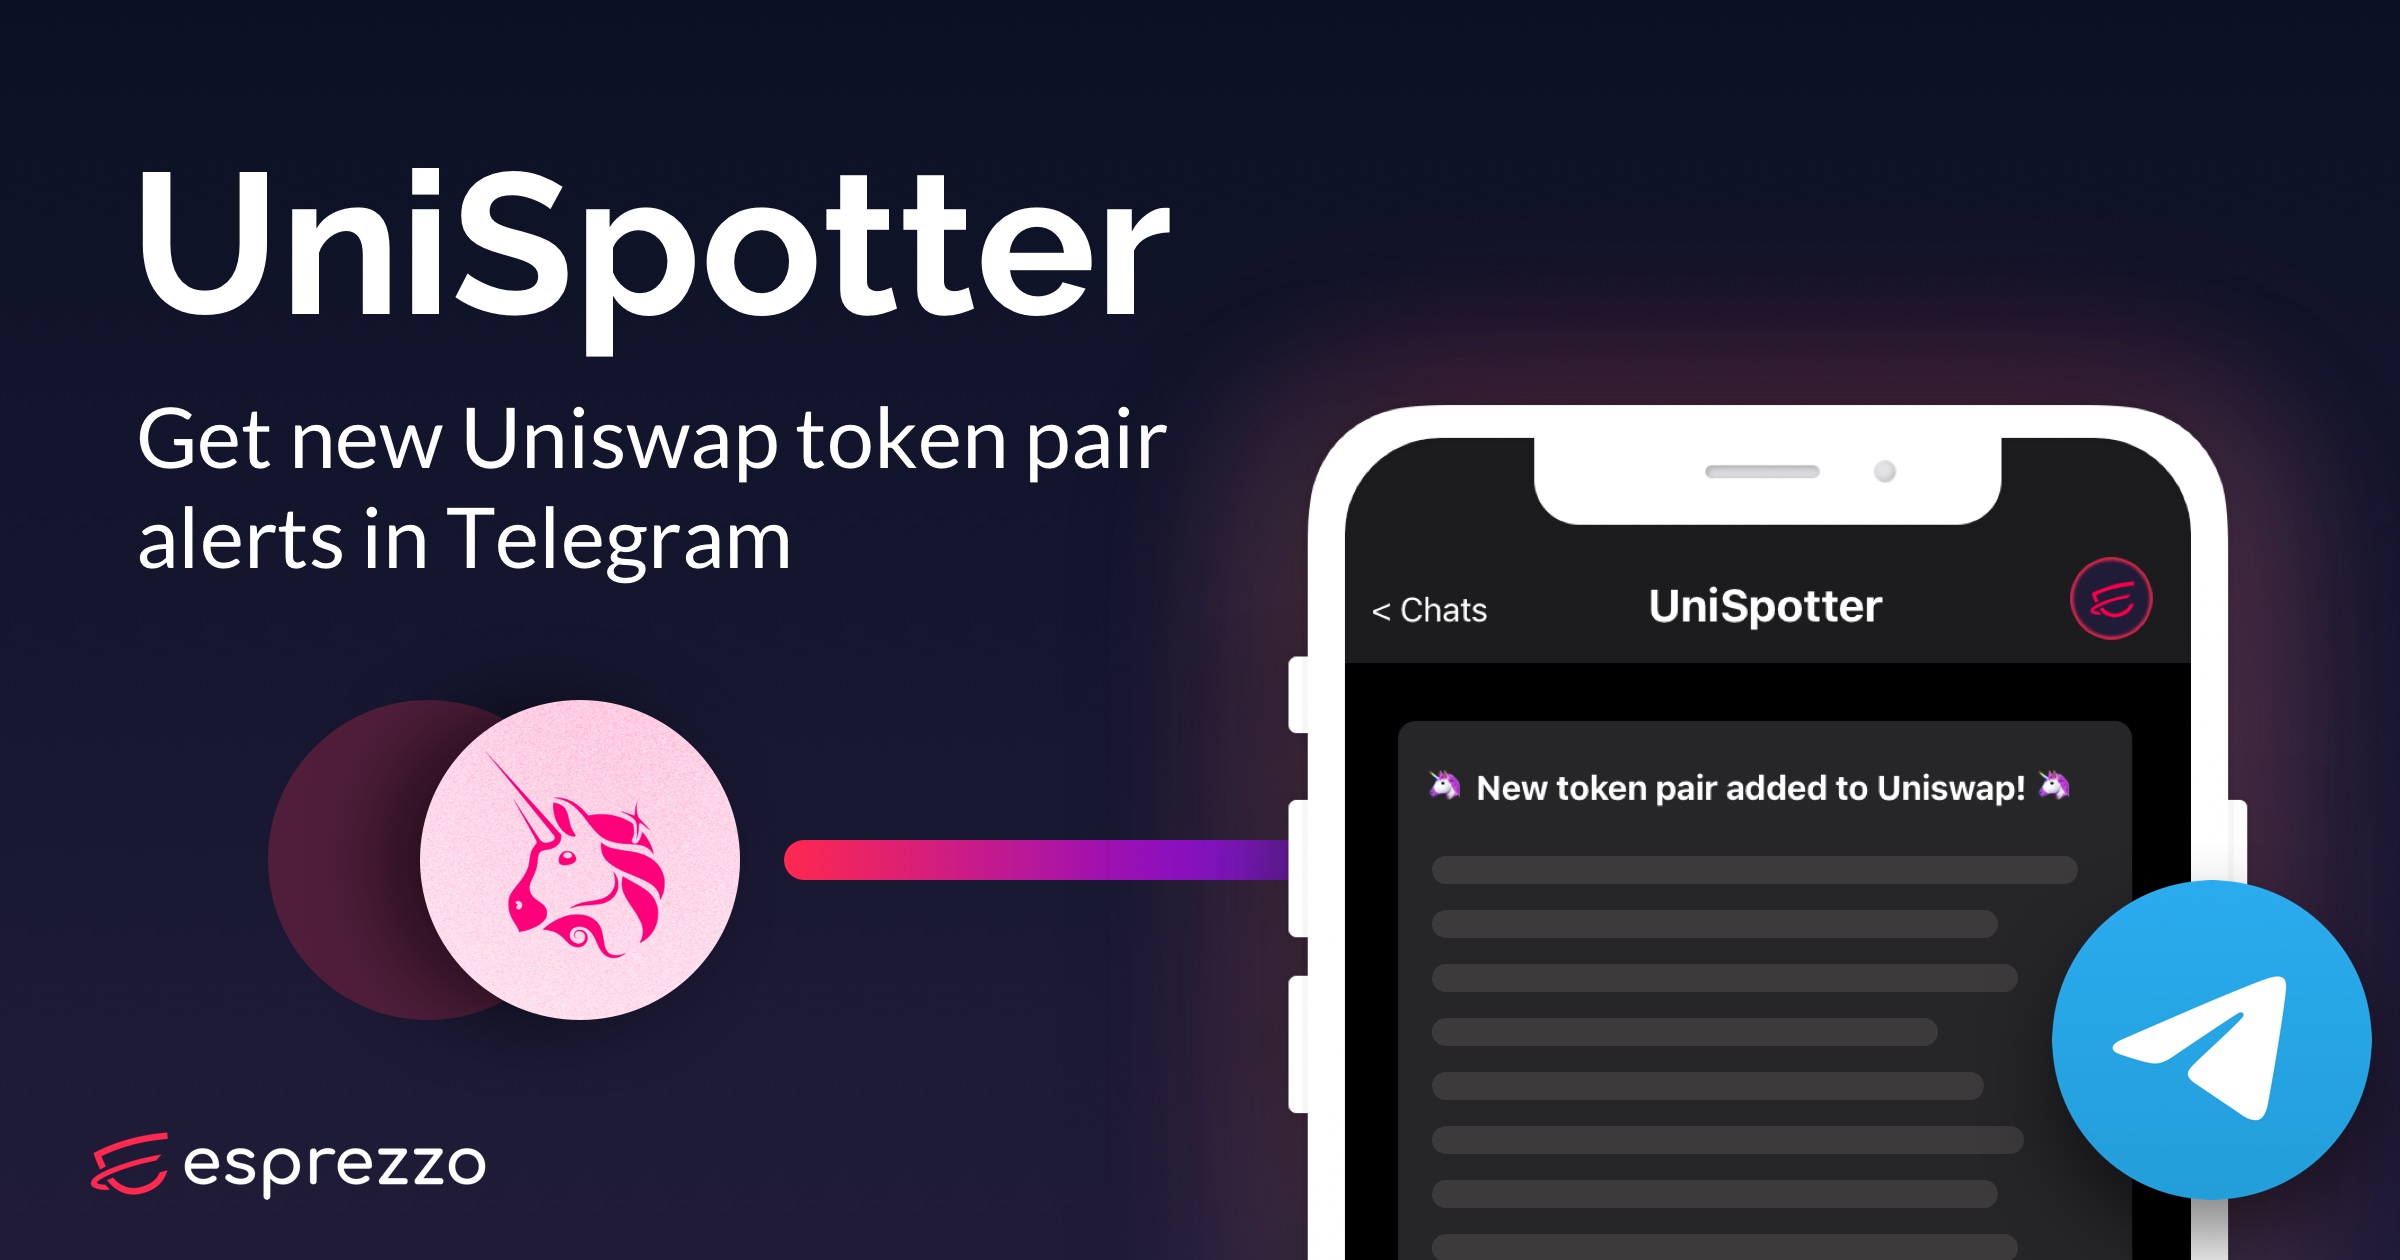 Image promoting UniSpotter, a Telegram bot by Esprezzo that notifies subscribers of new Uniswap token pairs